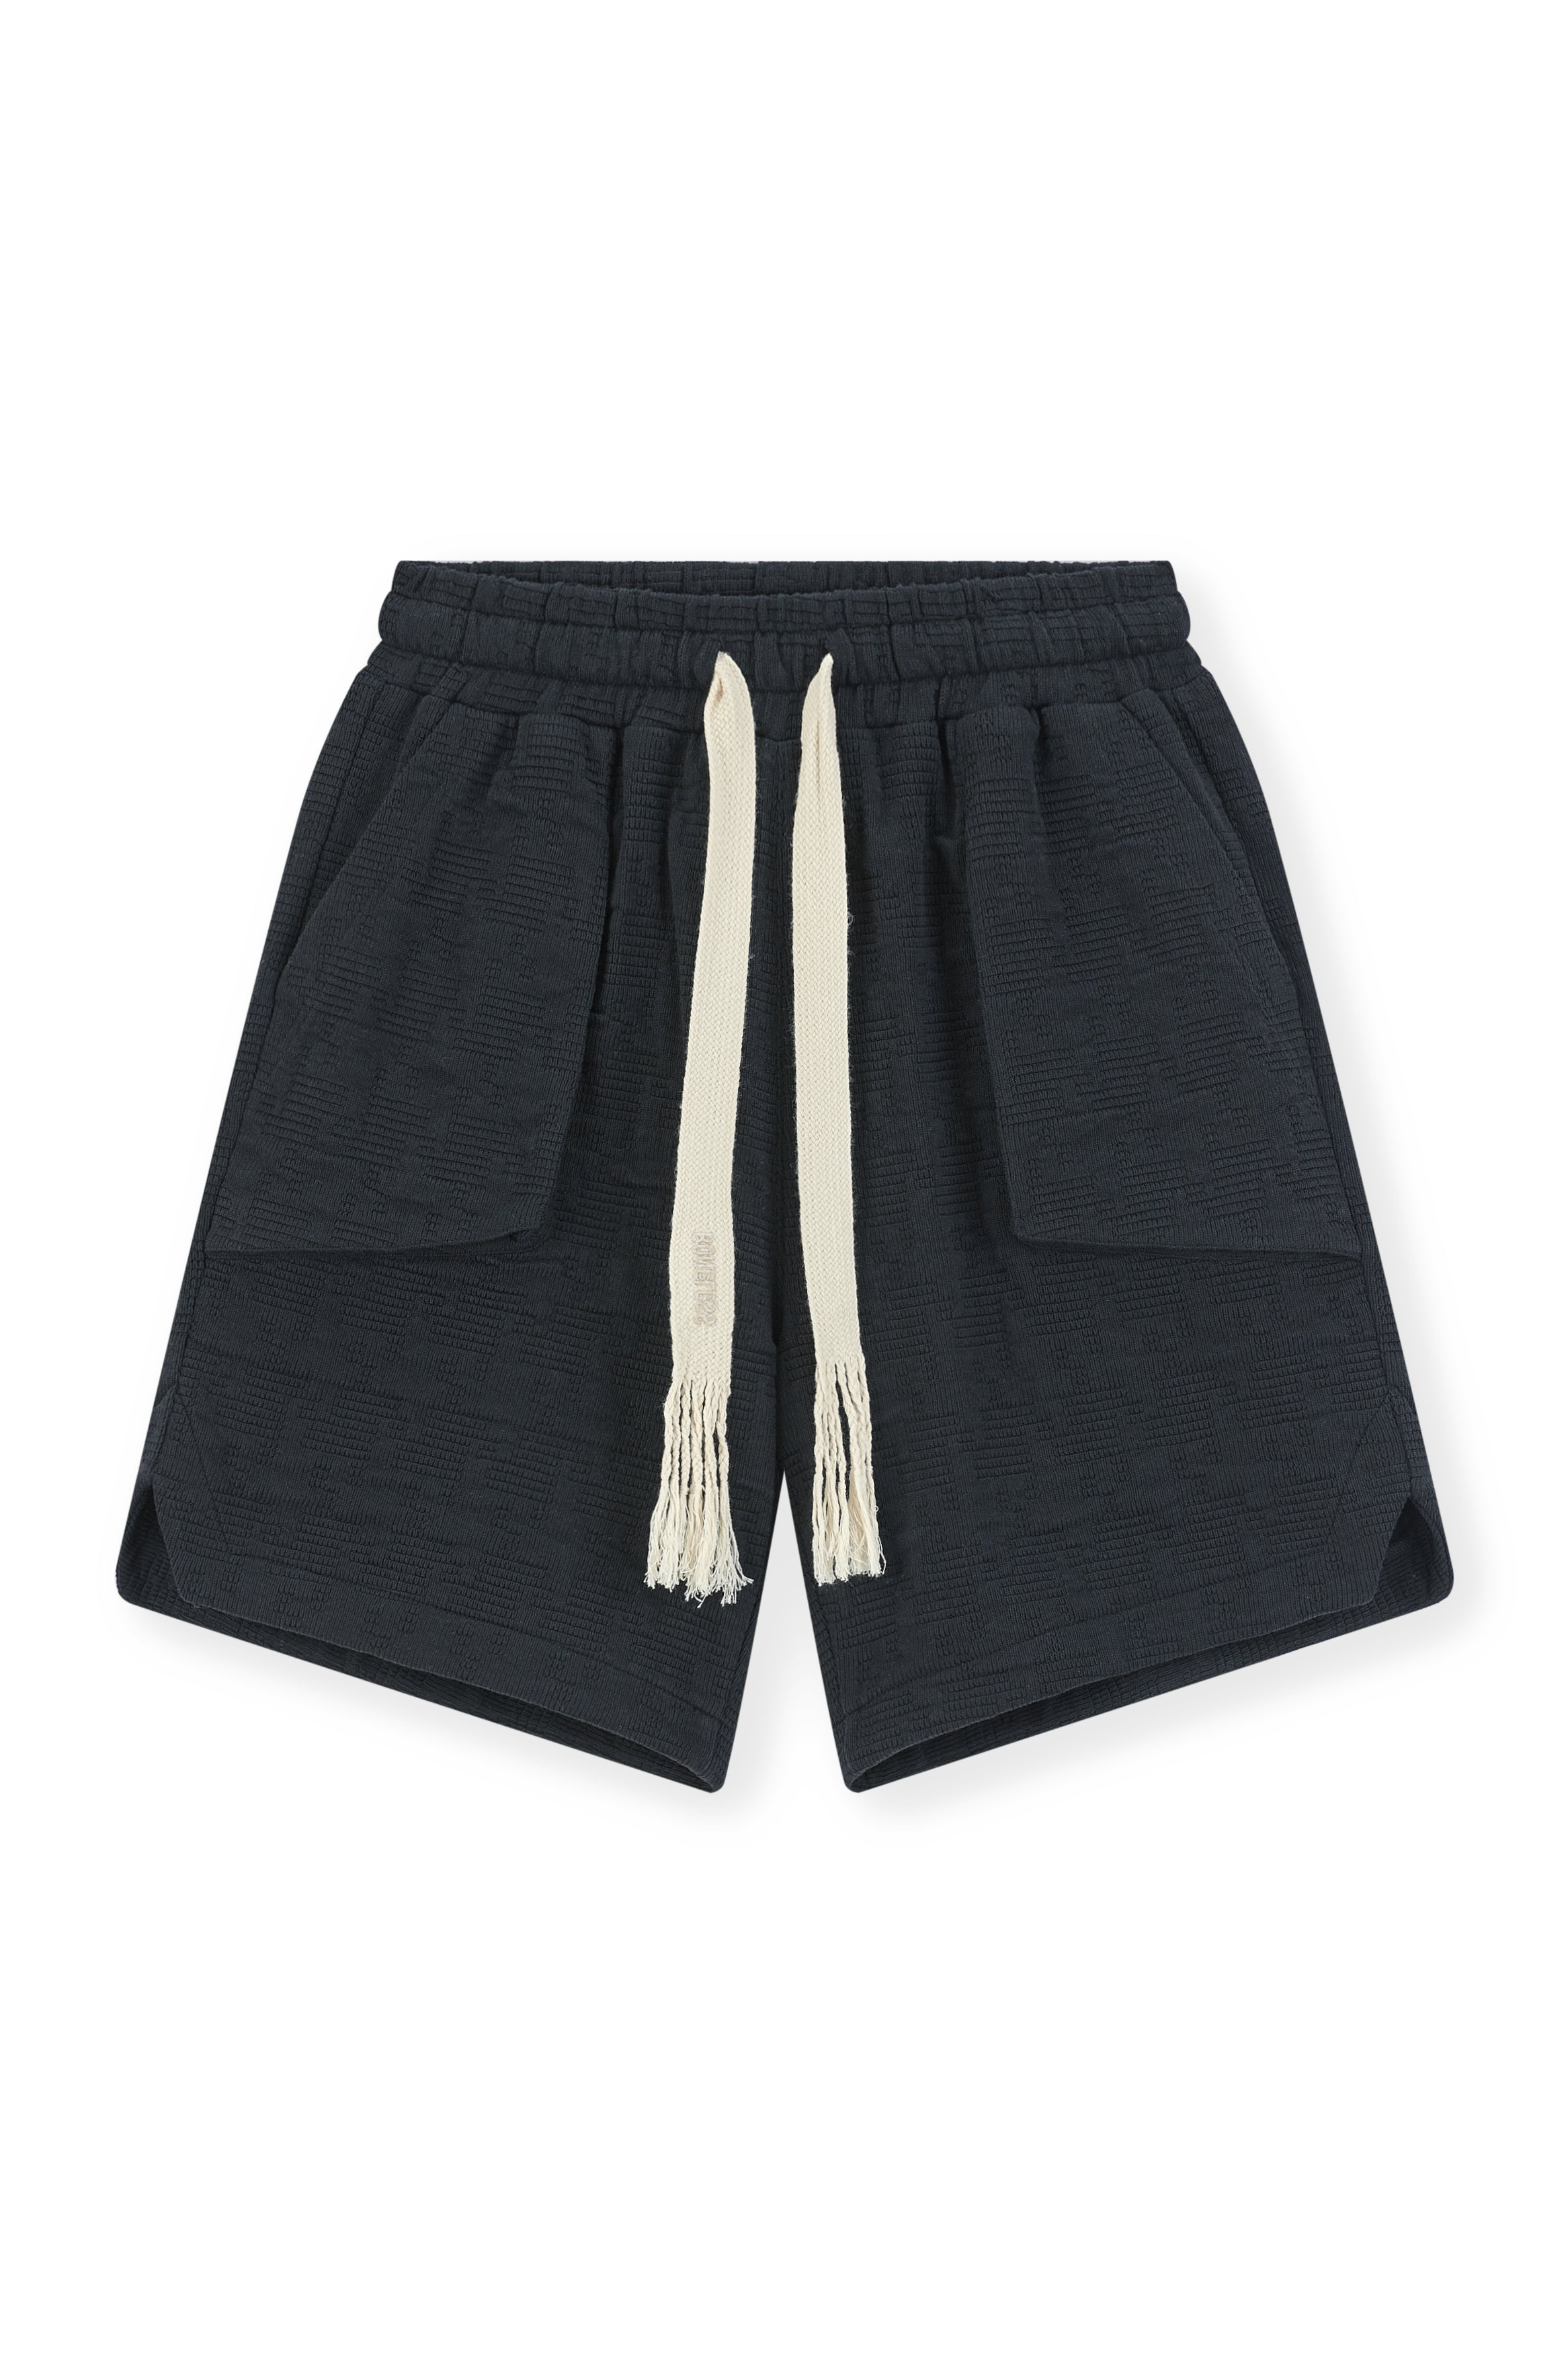 RISE Black Shorts – Levitate Clothing